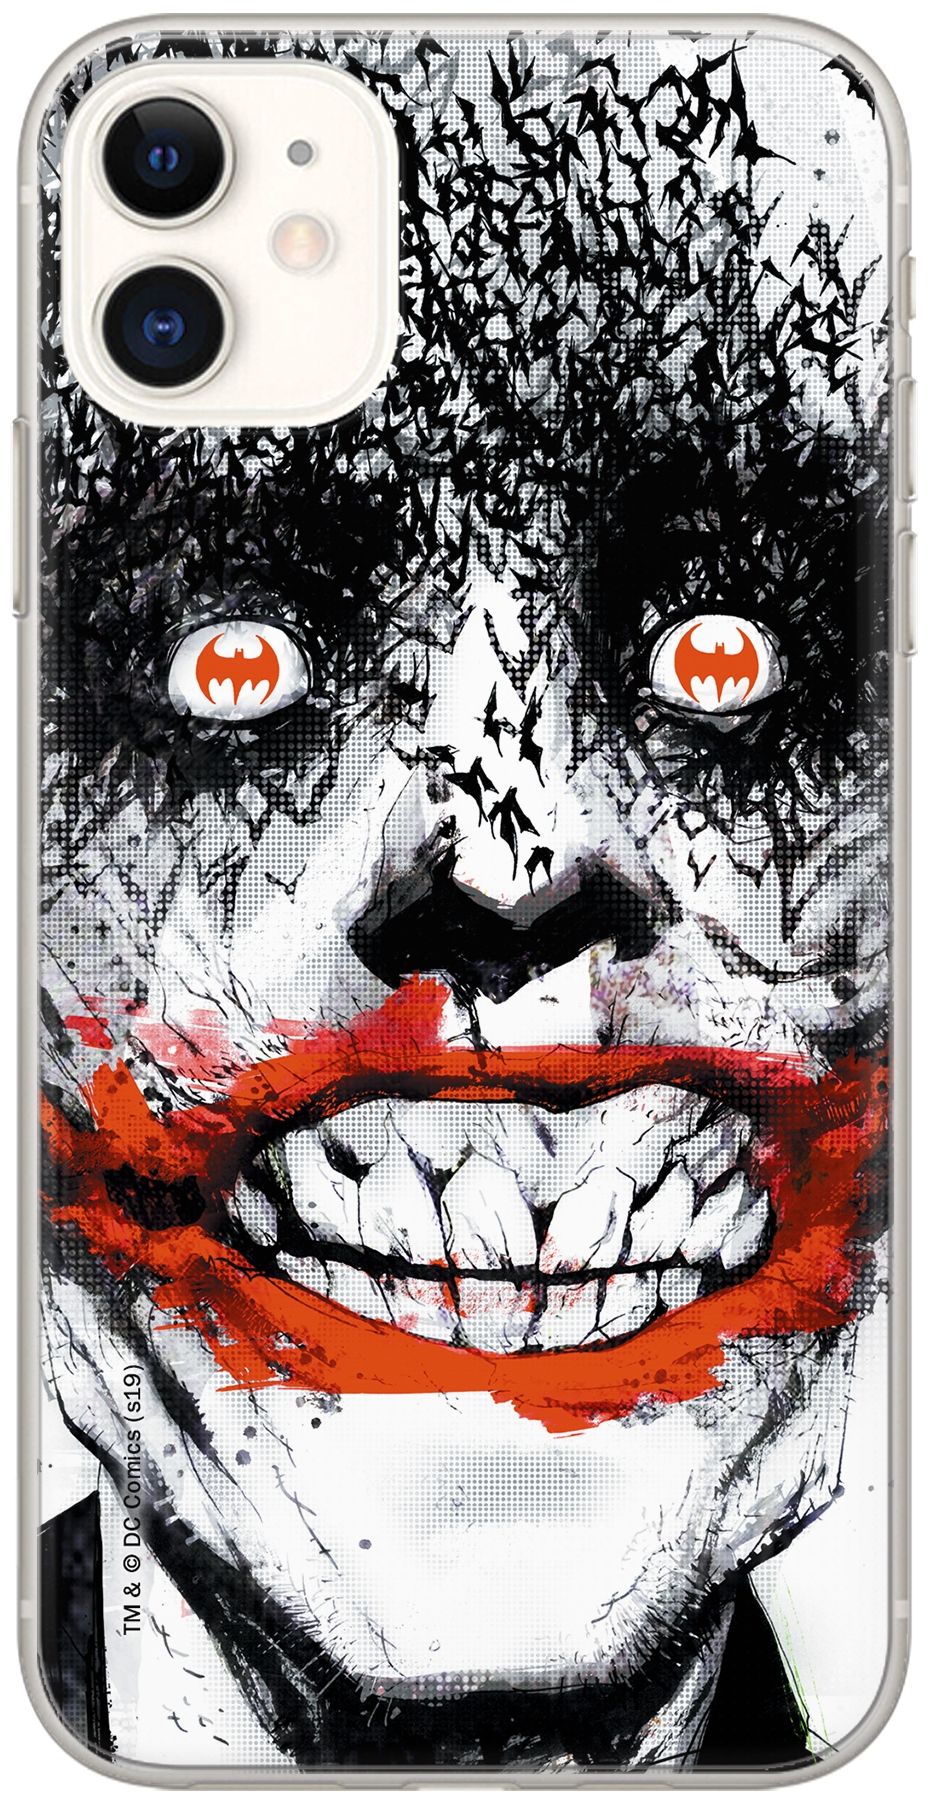 DC Lizenz Handyhülle für Iphone 12 Mini Hülle Motiv Joker 007